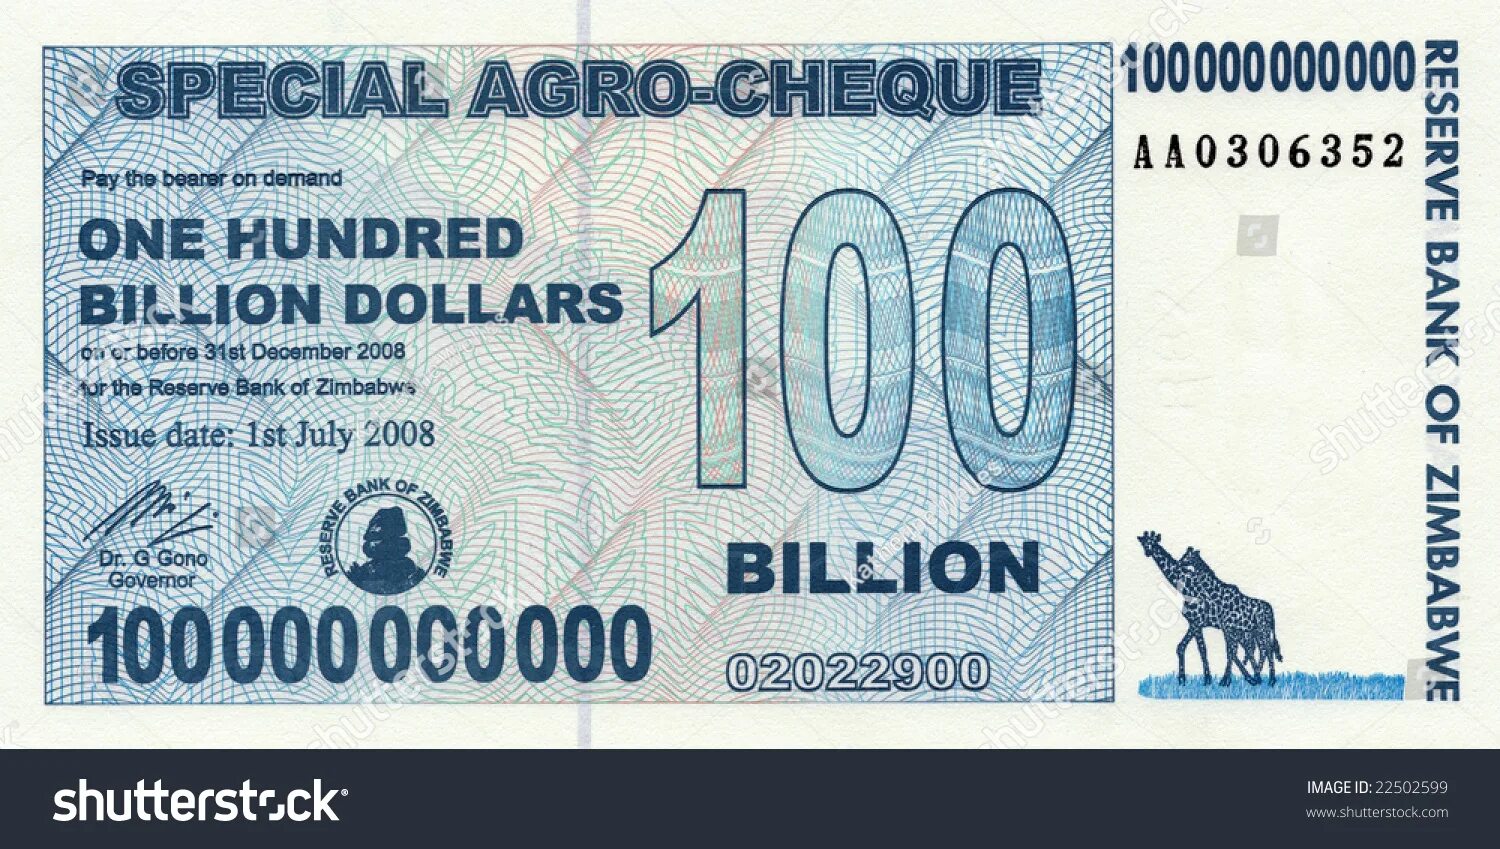 Биллион. Зимбабве валюта 100 триллионов. Банкнота 100 миллиардов долларов Зимбабве. Купюра 100 триллионов долларов Зимбабве. 100 Миллиардов купюра.